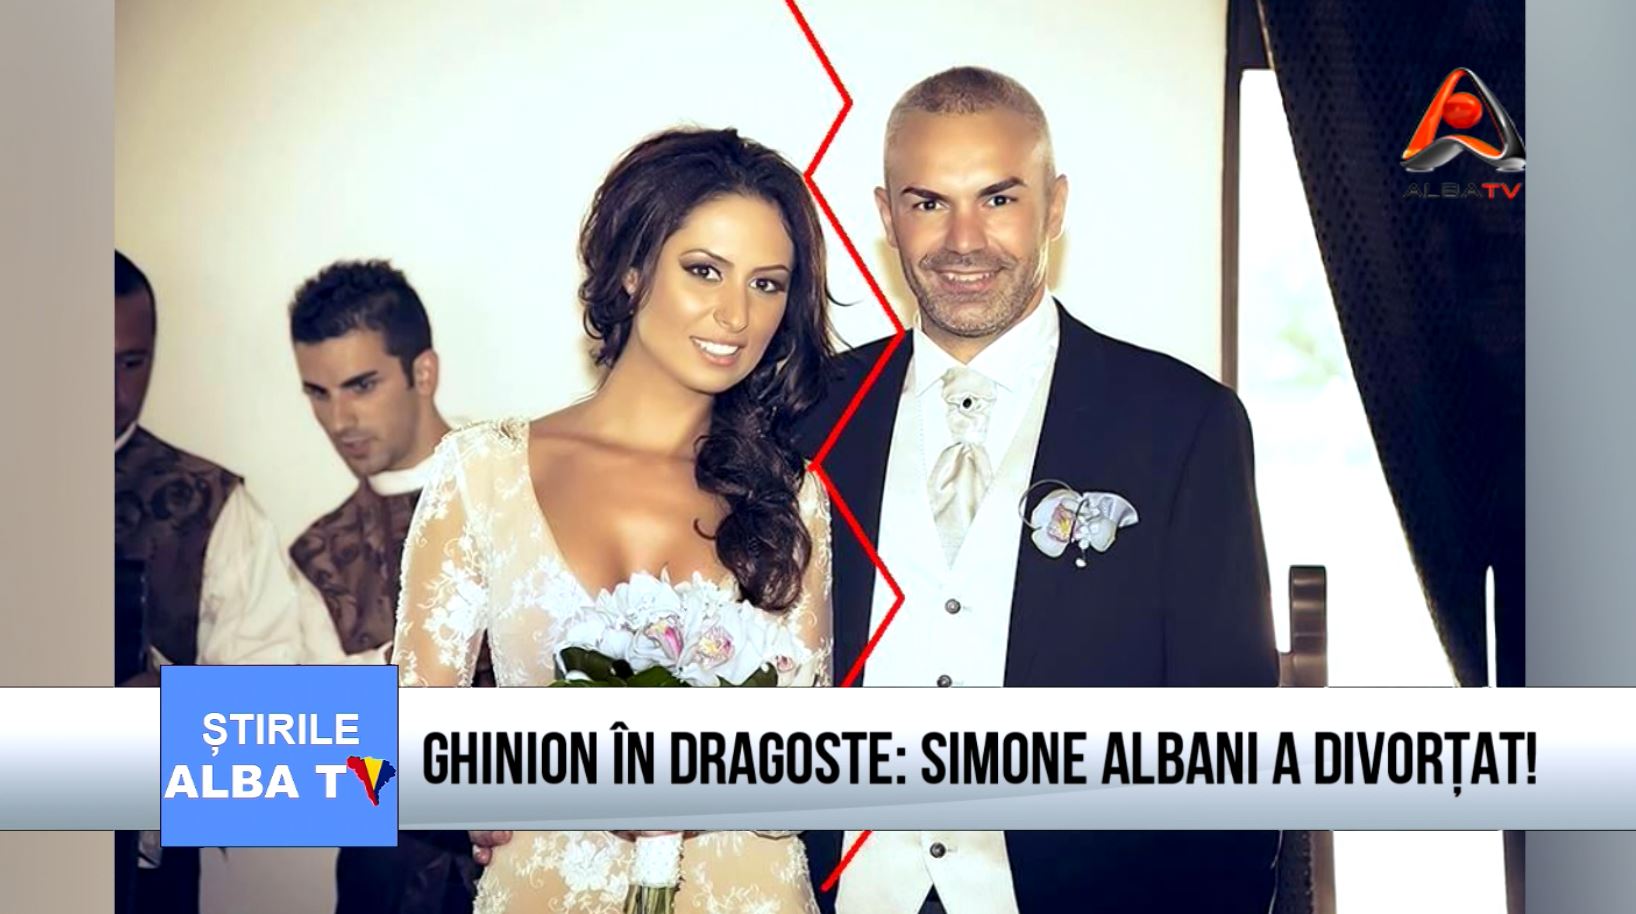 ghinion în dragoste: simone albani a divorţat! Ghinion în dragoste: Simone Albani a divorţat! ghinion in dragoste